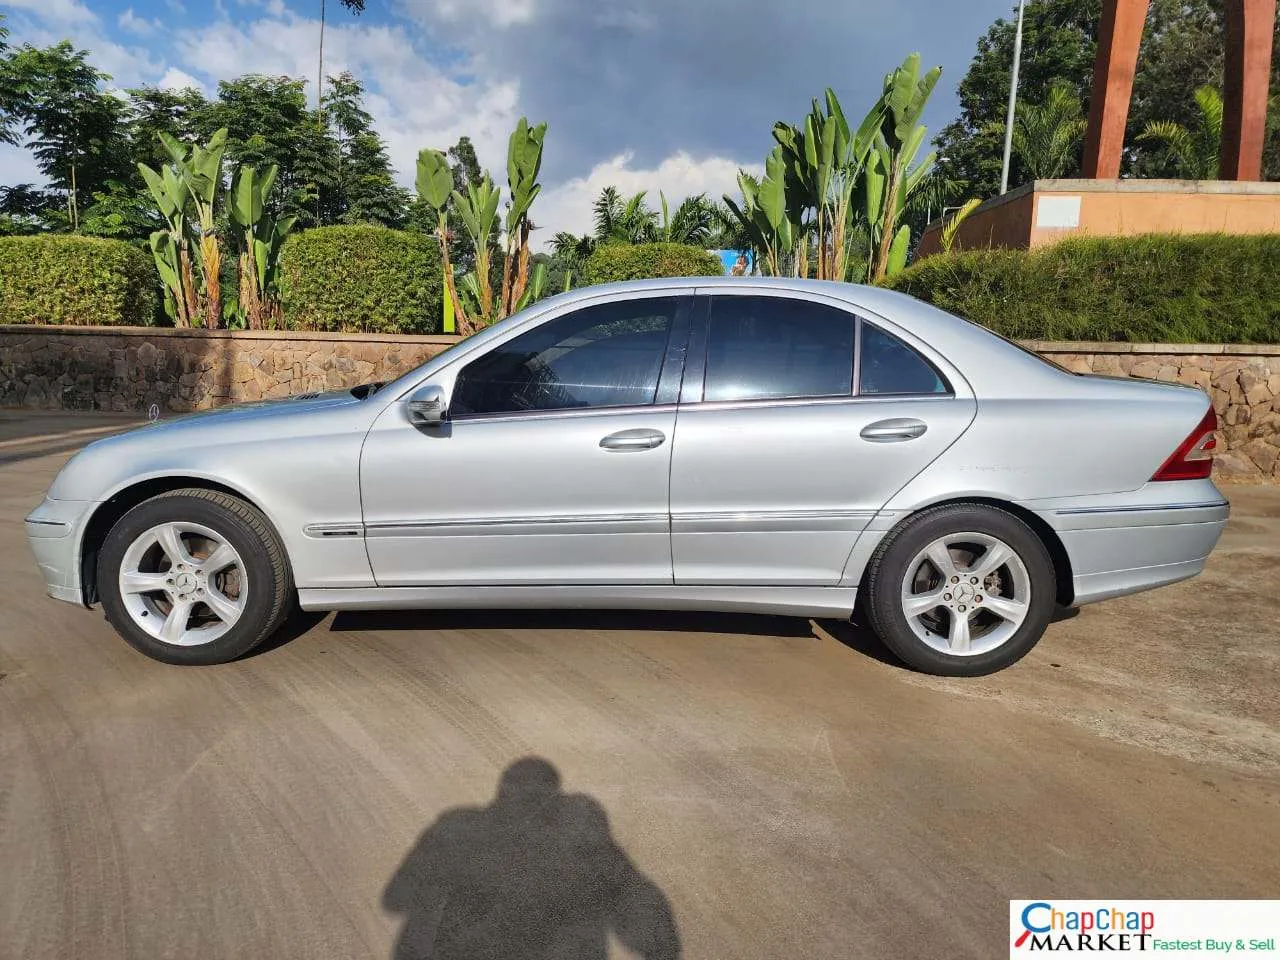 Mercedes Benz C180 for sale in Kenya 🔥 You Pay 30% DEPOSIT Trade in OK EXCLUSIVE – ChapChap Market